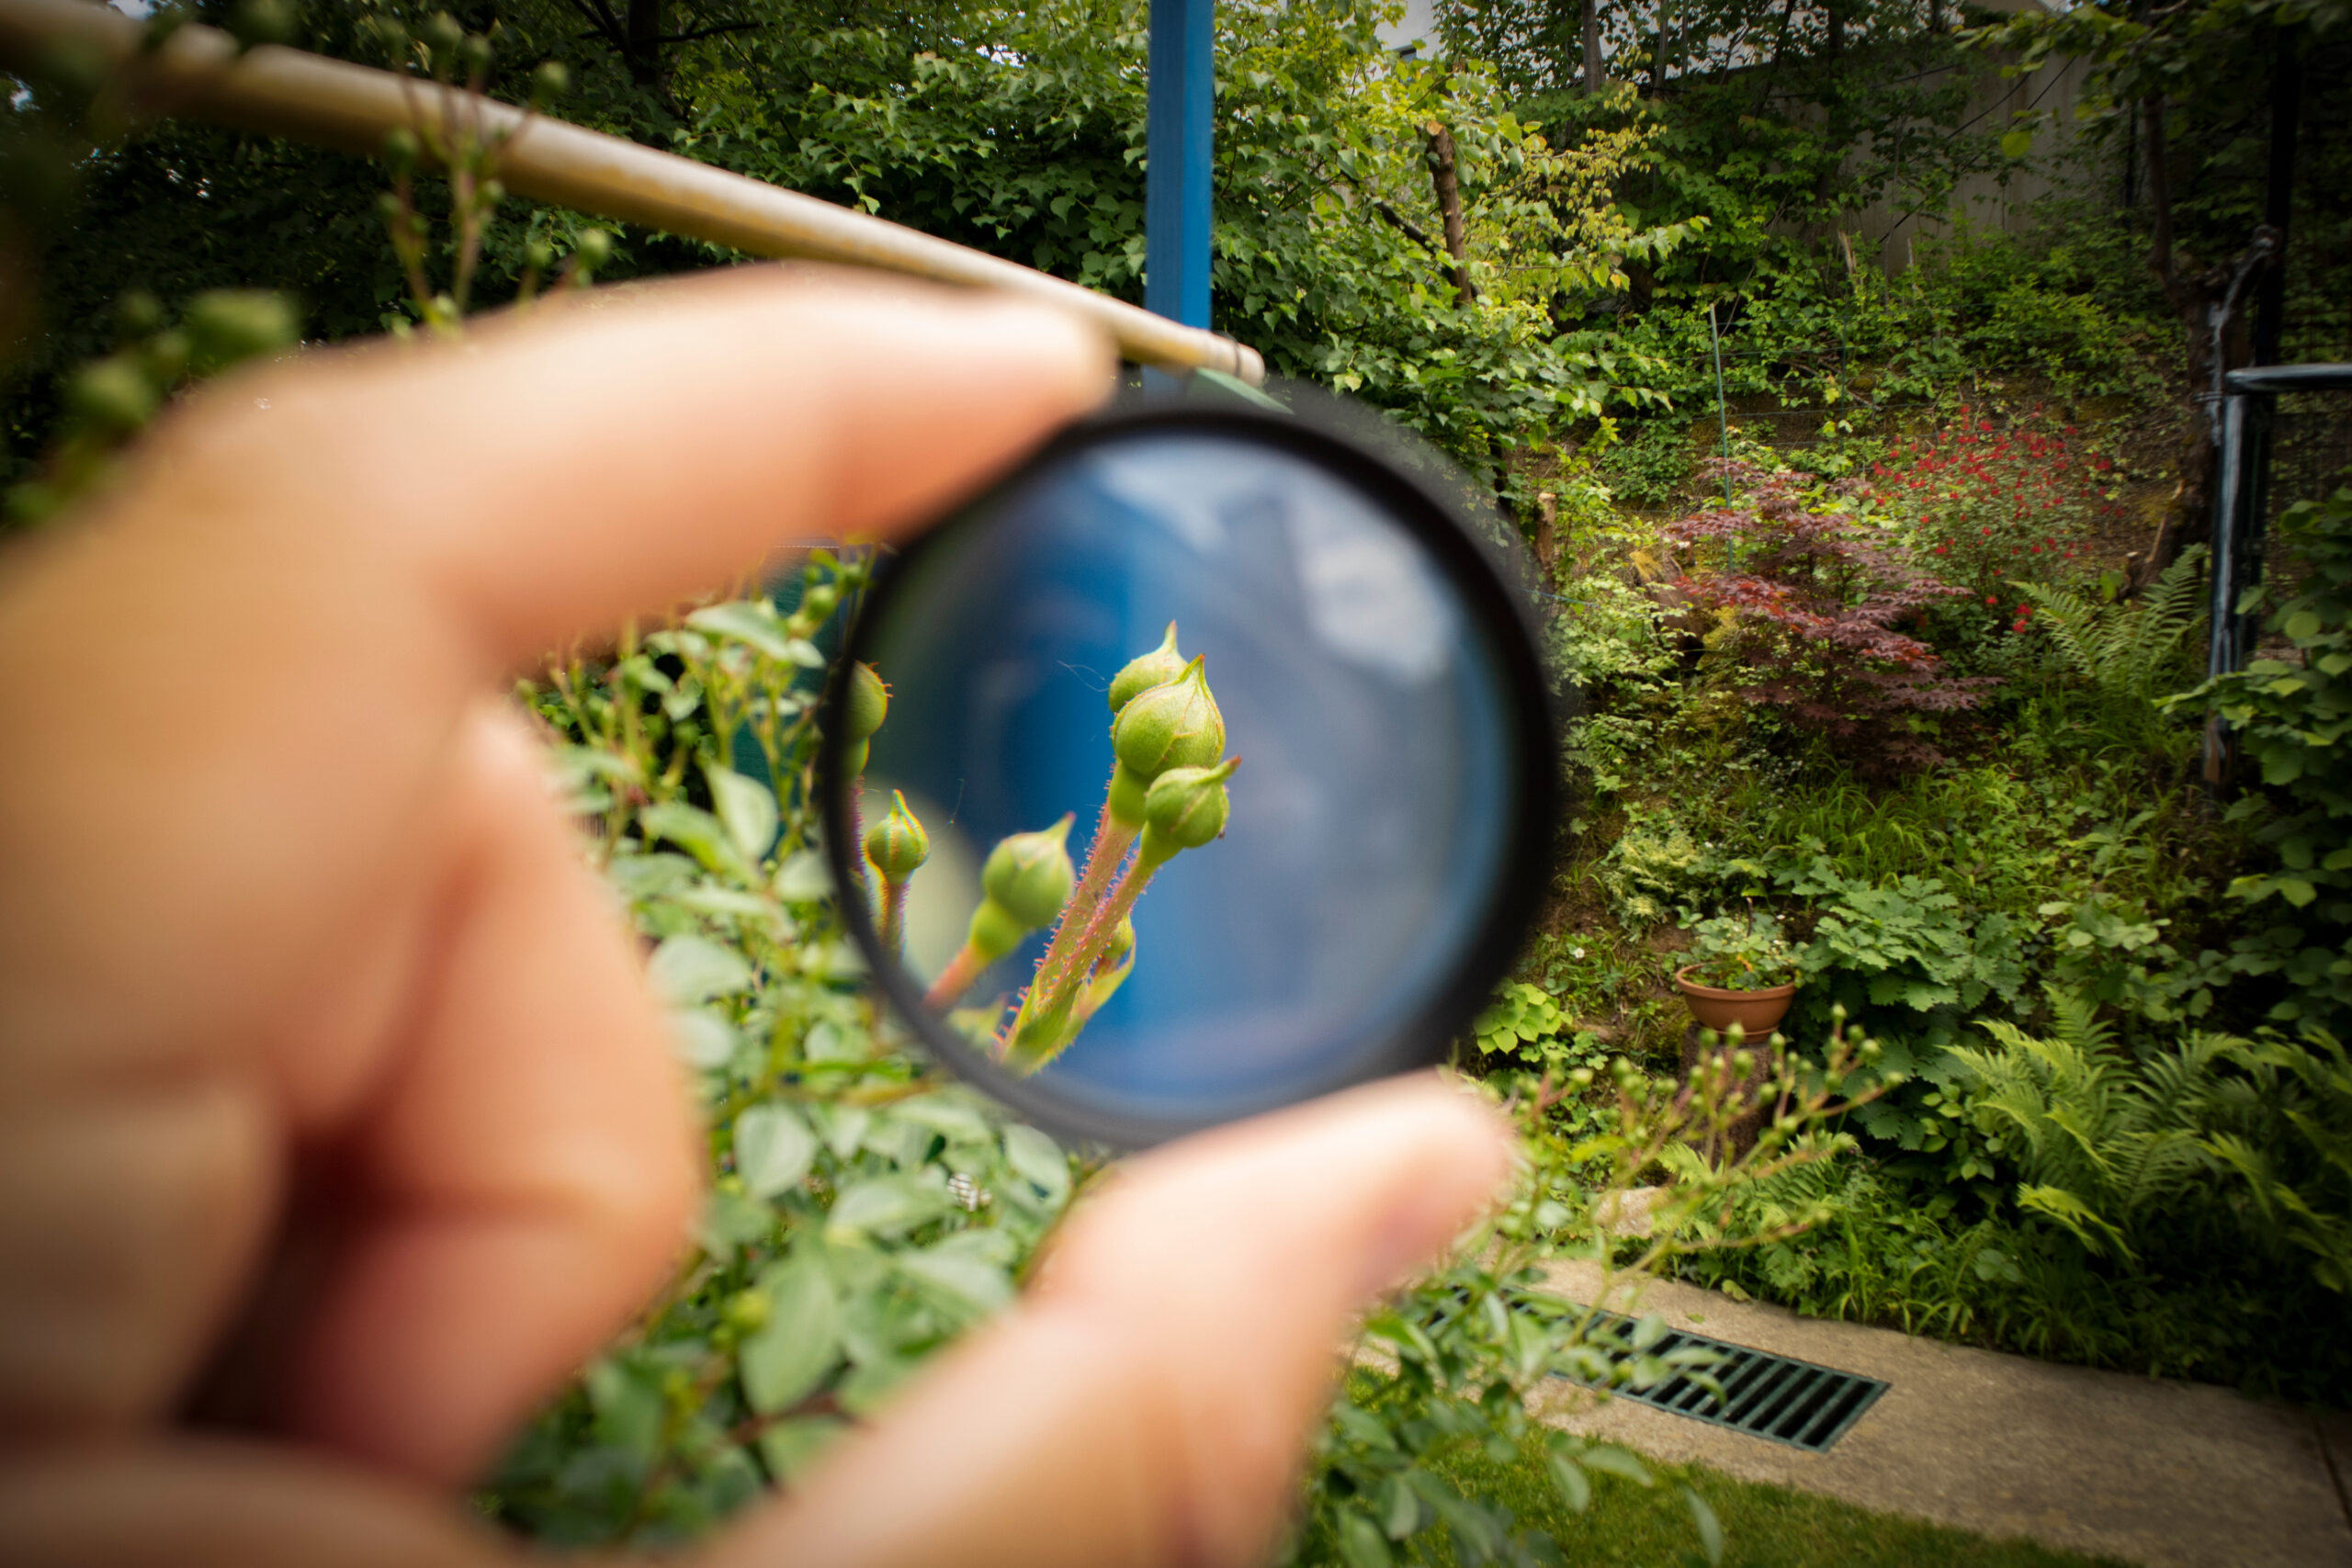 Black magnifier in hand examining green vegetation